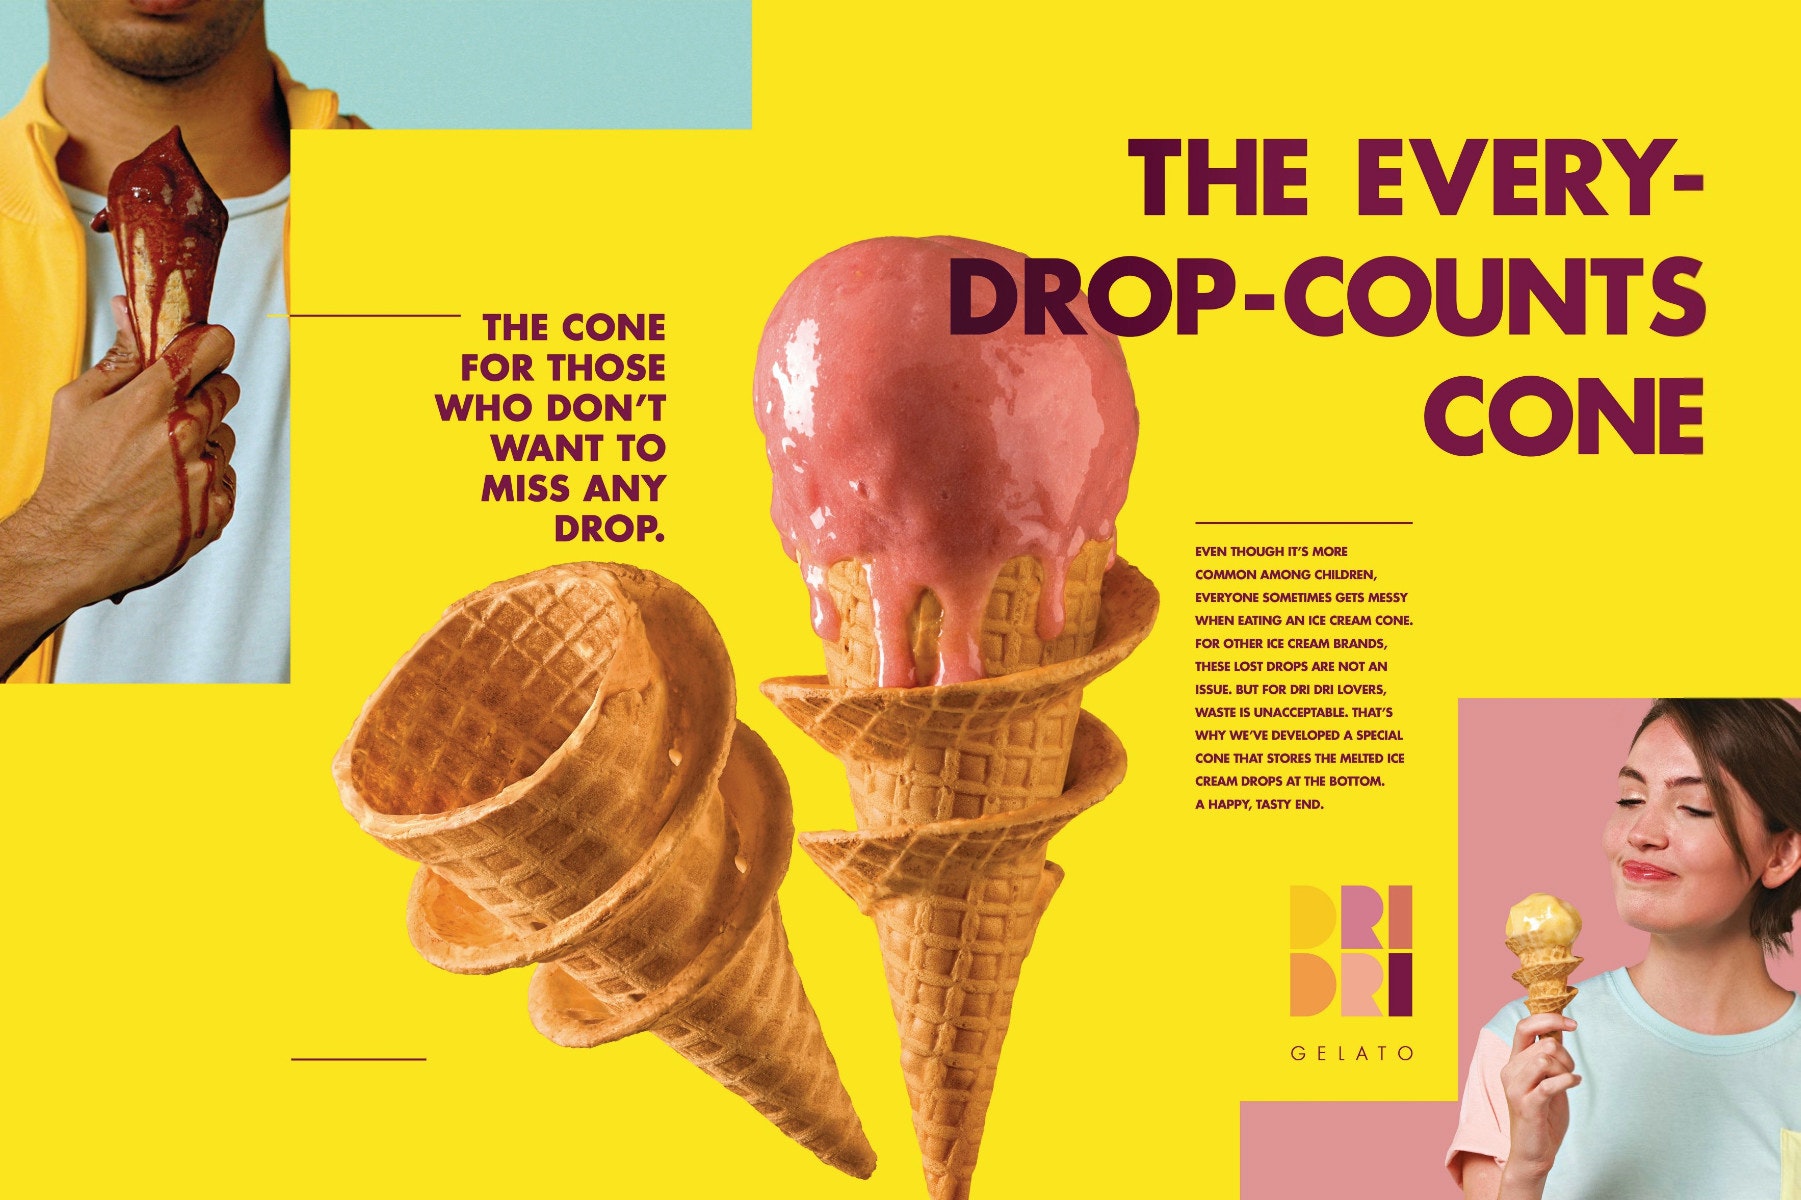 Ice Cream Cones, Ice cream, Advertising, Gelato, Cream, Dri Dri Gelato, Cone, , Marketing, Brand, every drop counts cone, ice cream cone, text, product, food, advertising, human behavior, font, graphic design, flavor, brand